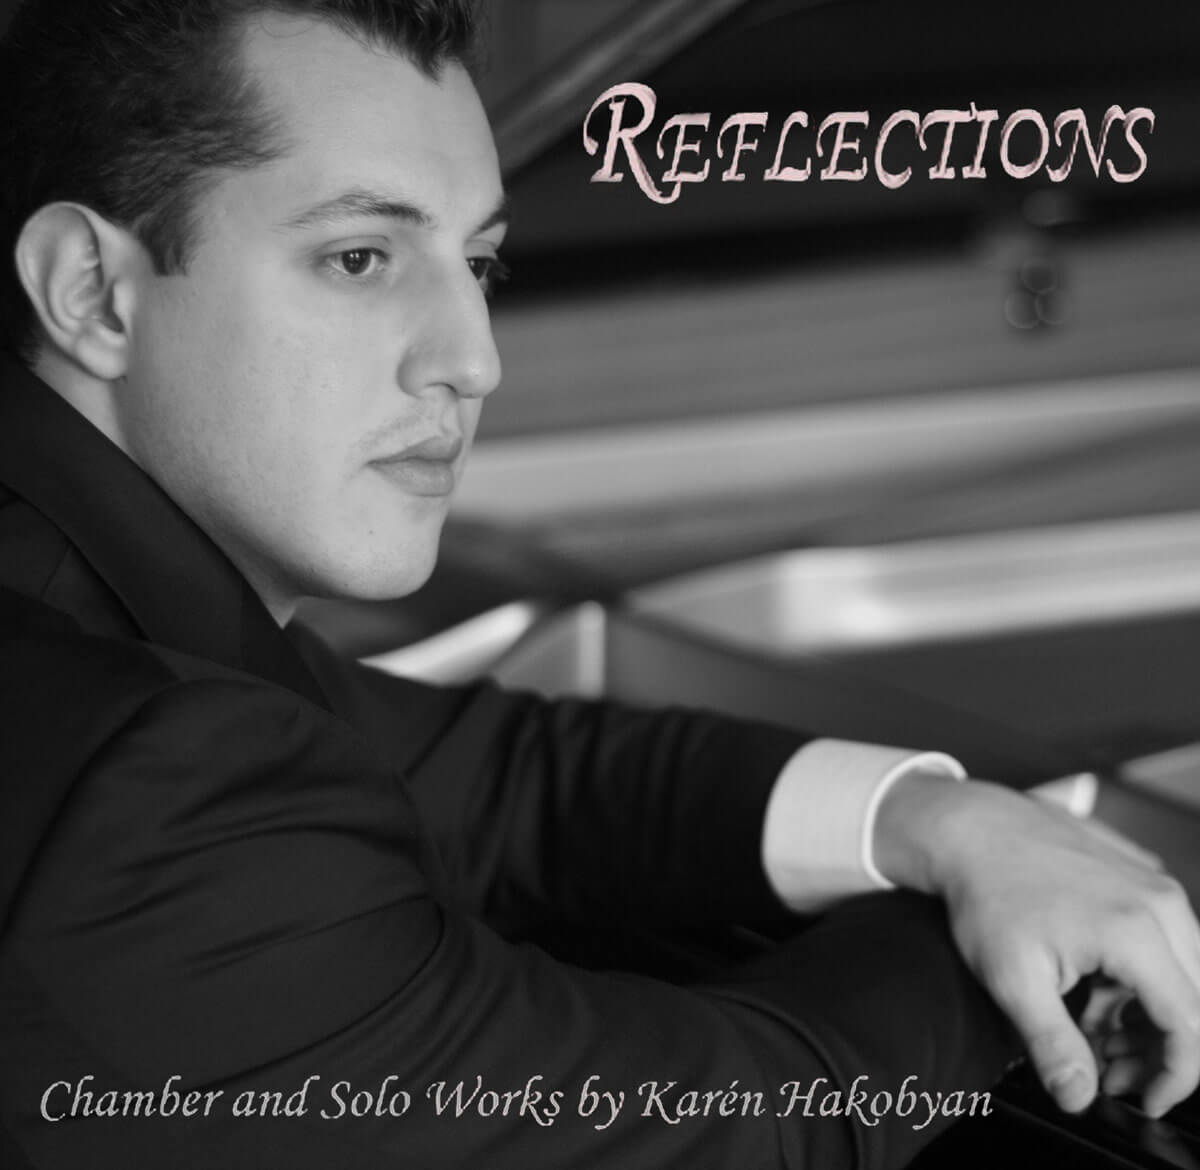 Reflections by Karen Hakobyan